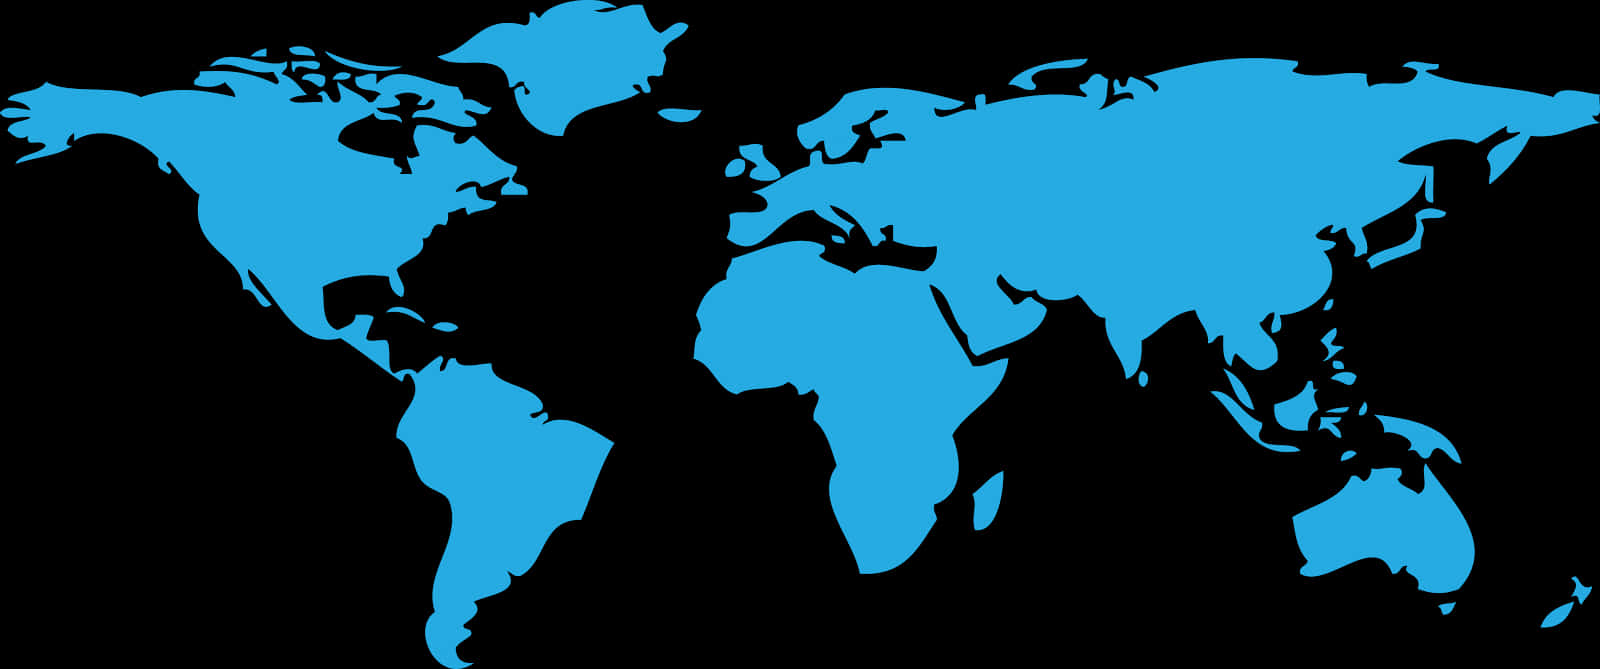 A Blue World Map On A Black Background